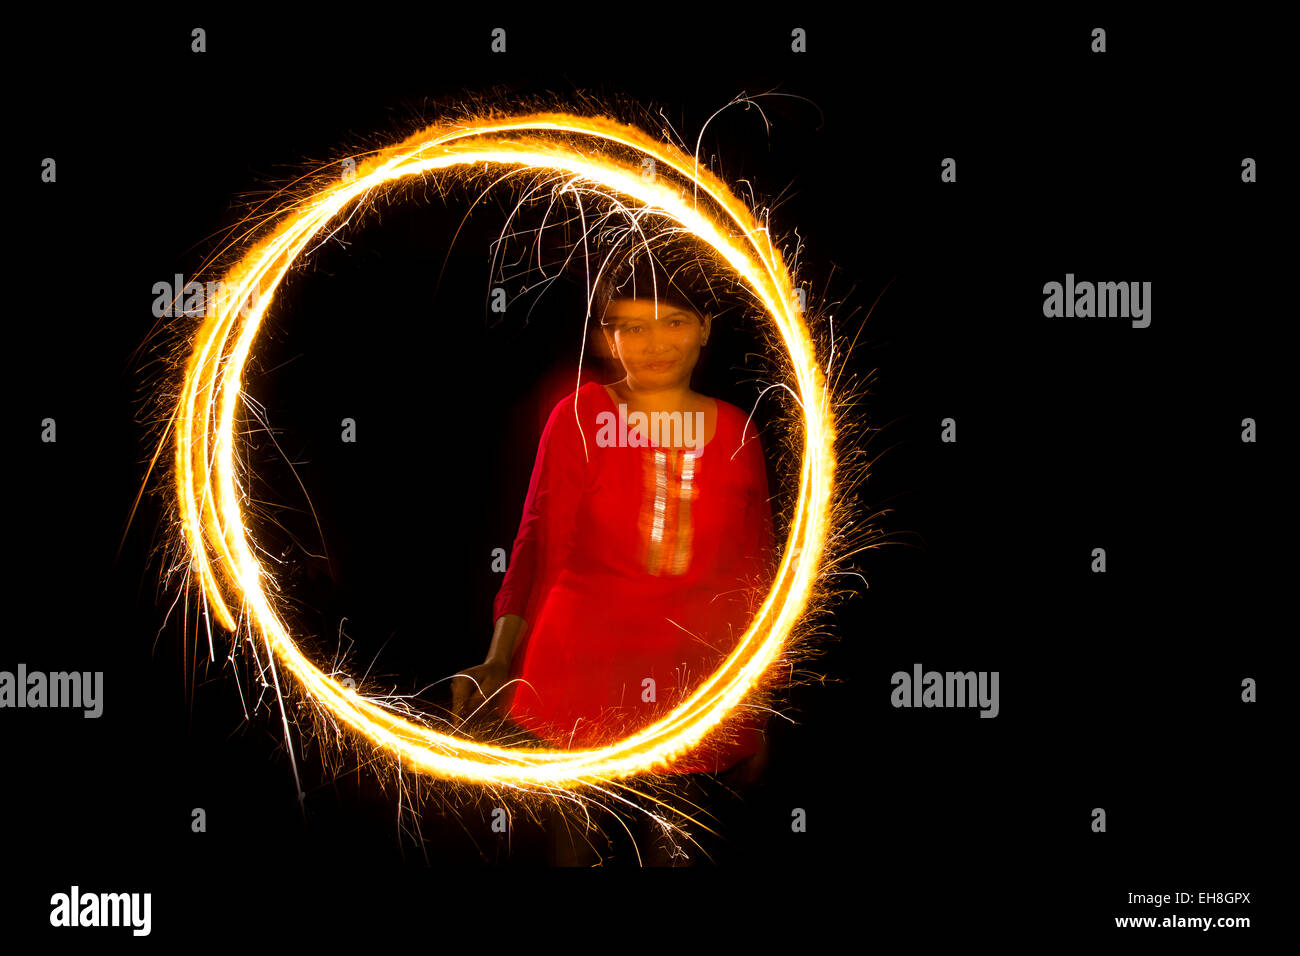 1 indian Adult Woman Housewife diwali Burning Fire Crackers enjoy Stock Photo